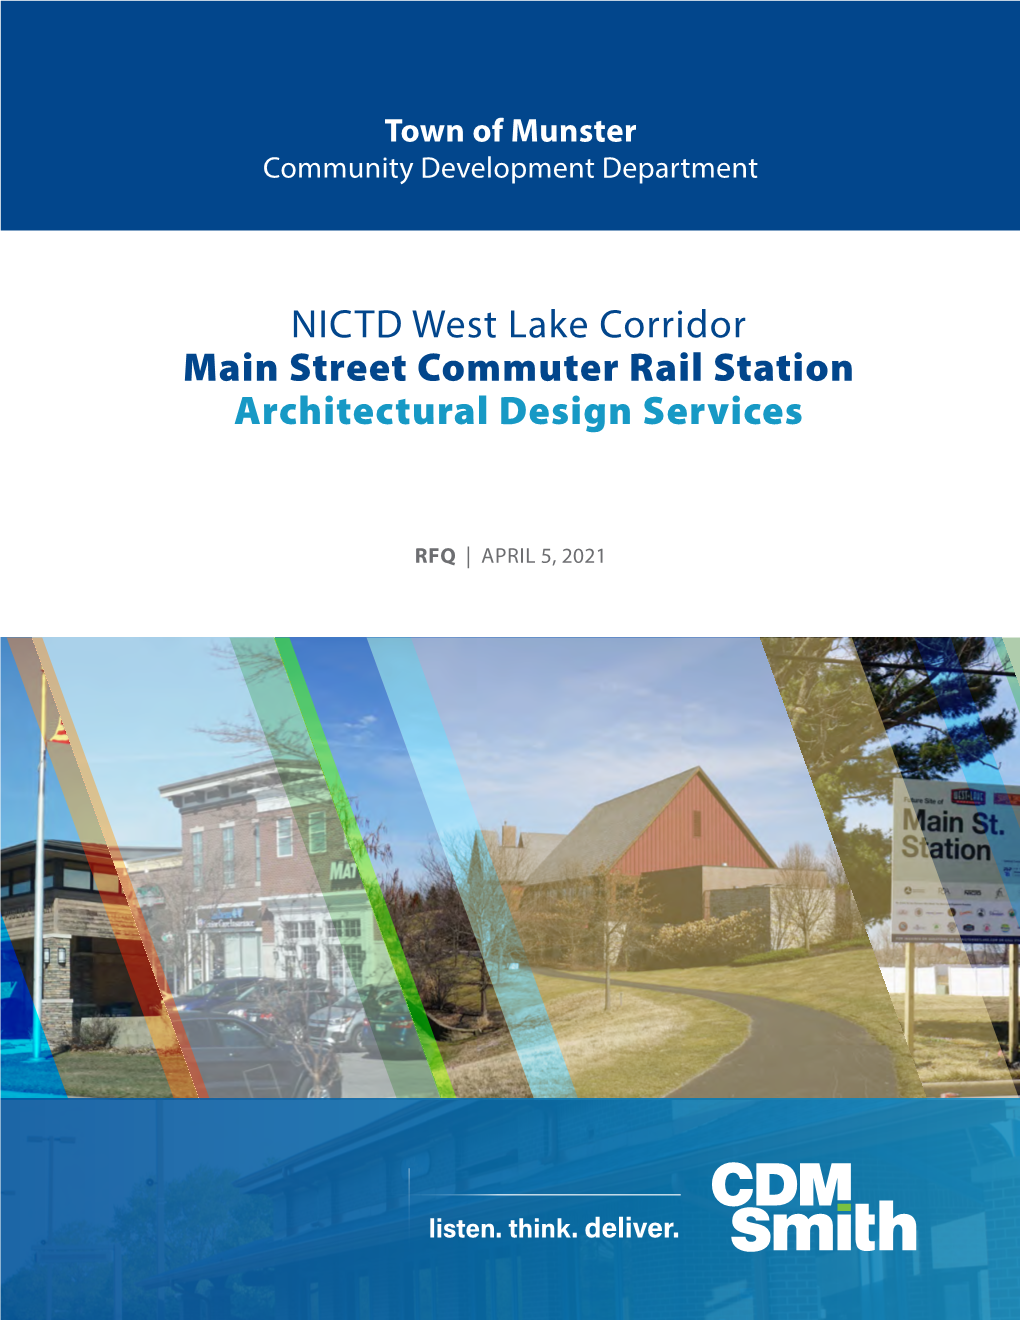 NICTD West Lake Corridor Main Street Commuter Rail Station Architectural Design Services